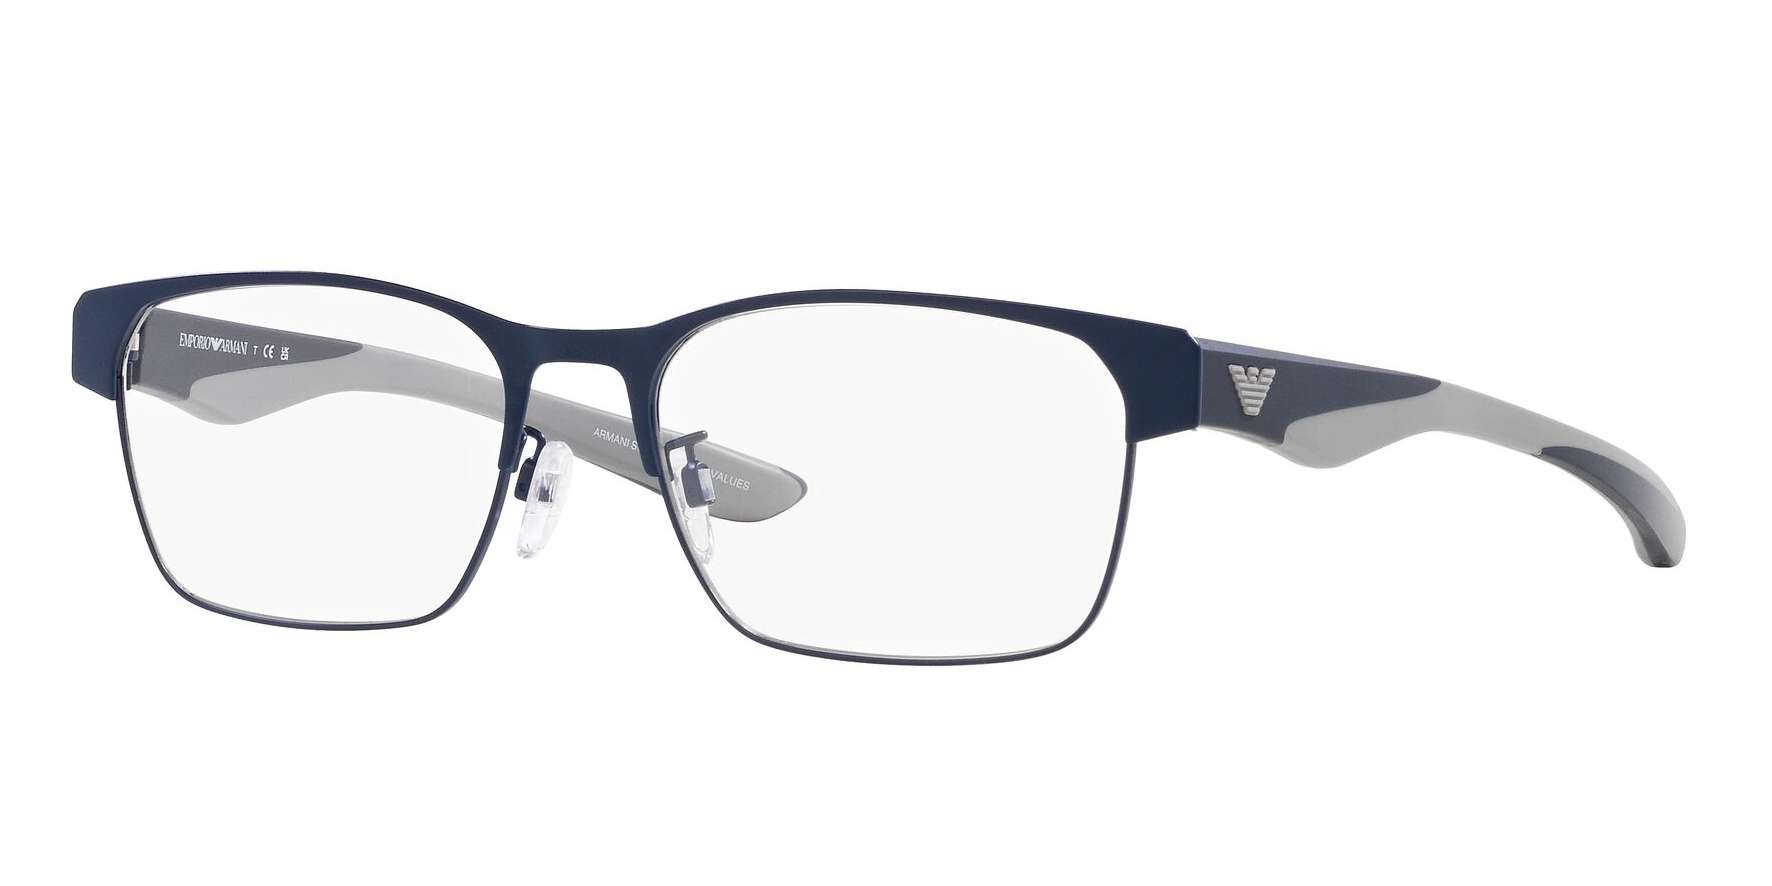 Armani briller - ea1141 fra Emporio Armani - Blå - Metall - rektangulær - Medium